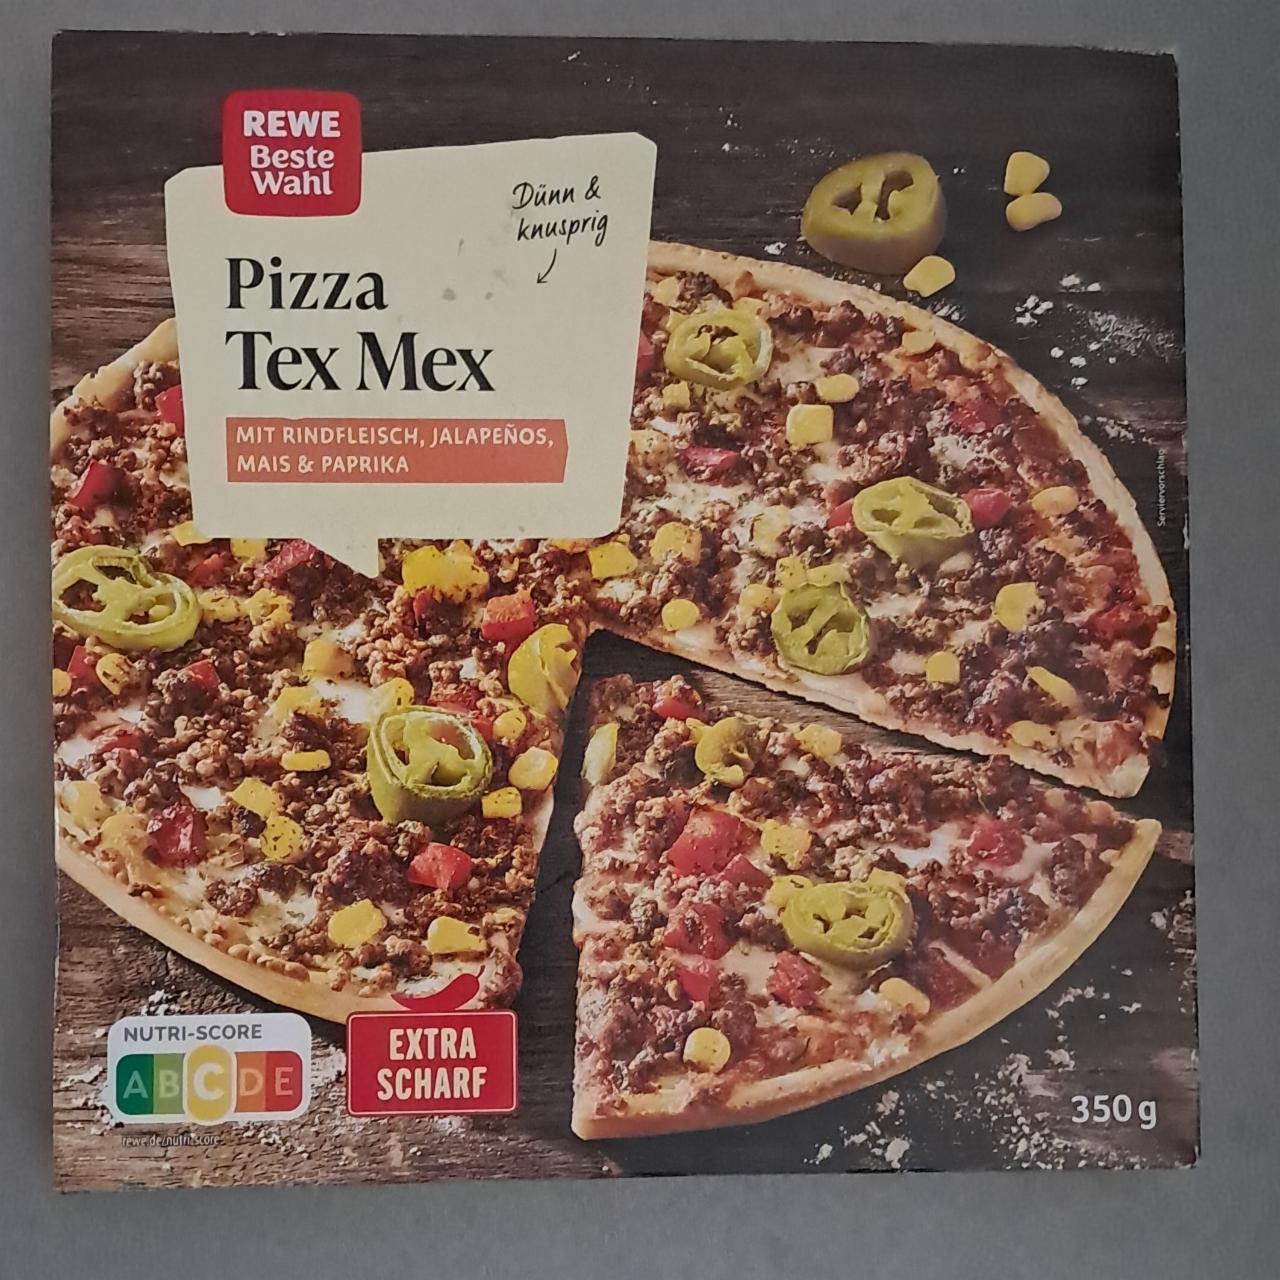 Fotografie - Pizza tex mex Rewe beste wahl